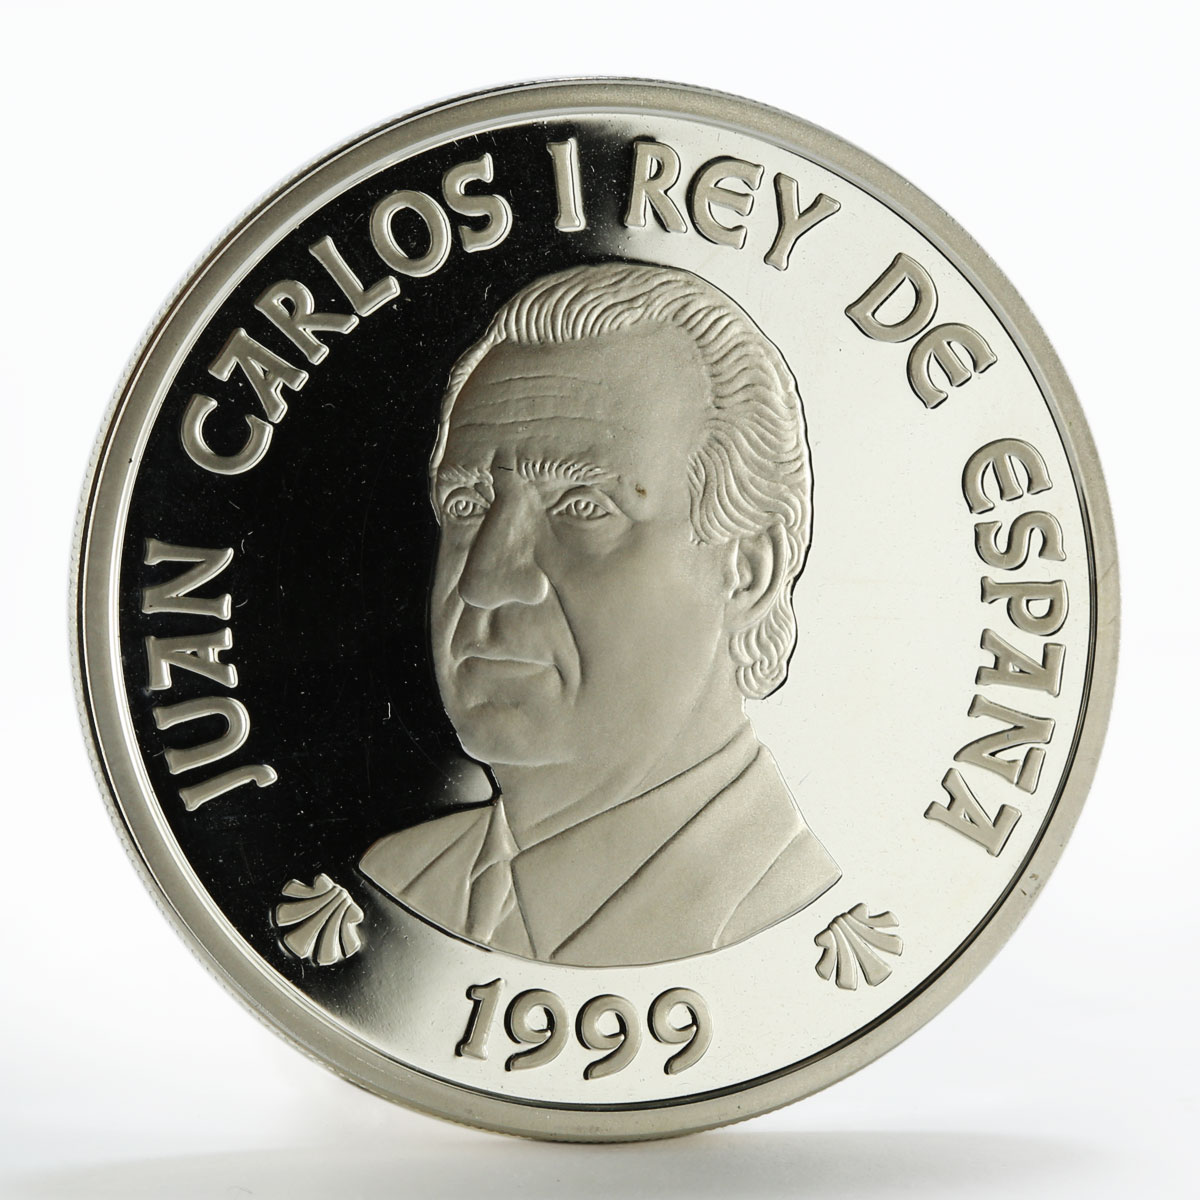 Spain 2000 pesetas Holy Year of St. James church silver coin 1999